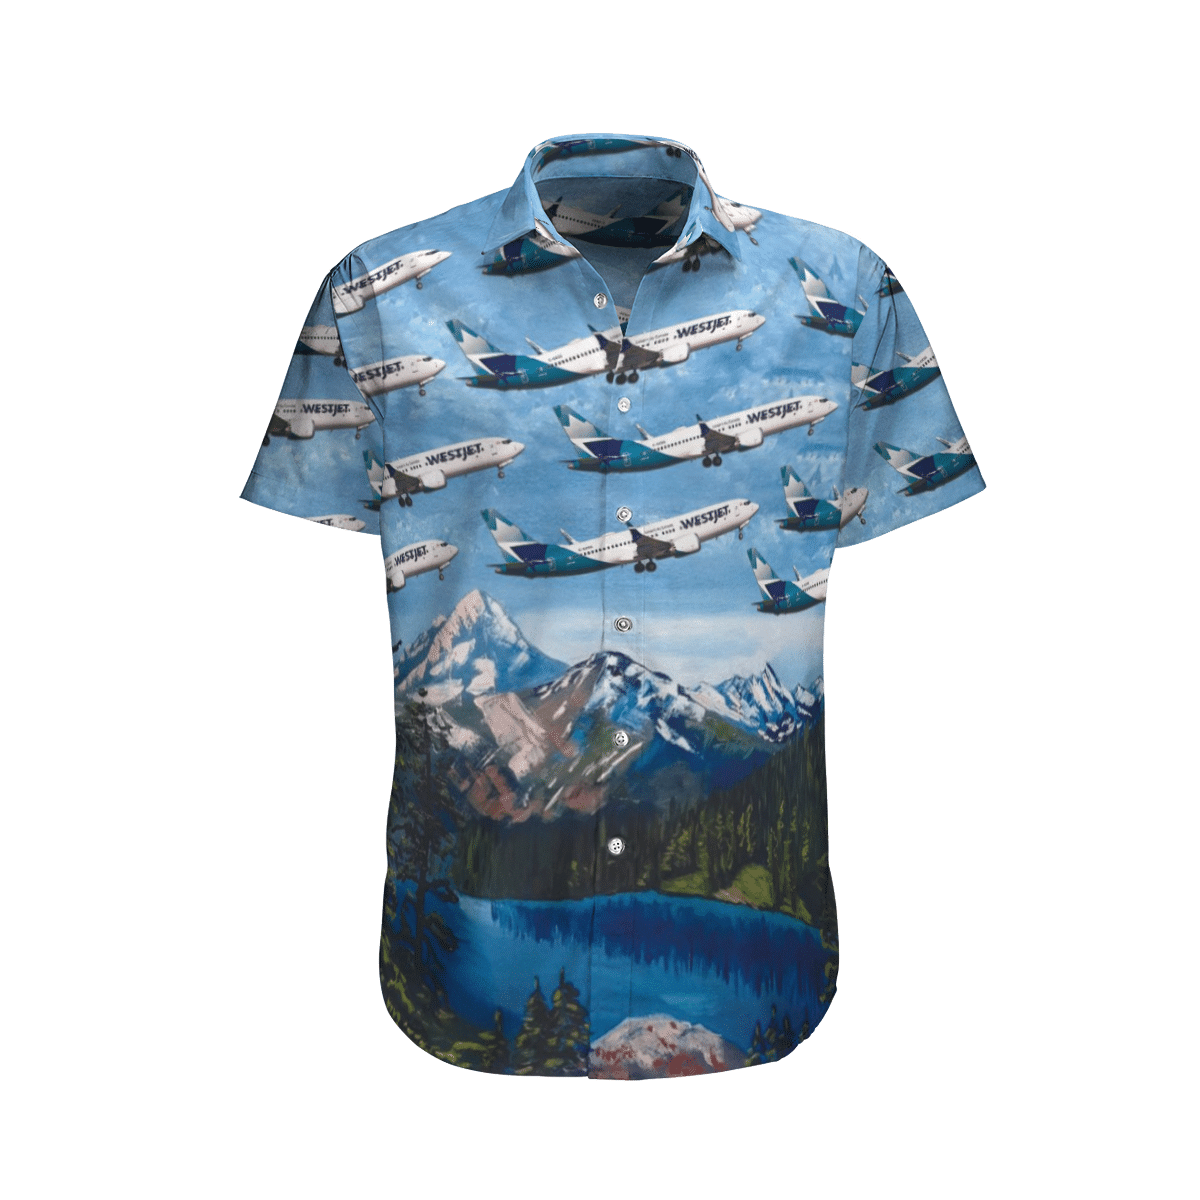 Get a new Hawaiian shirt to enjoy summer vacation 145